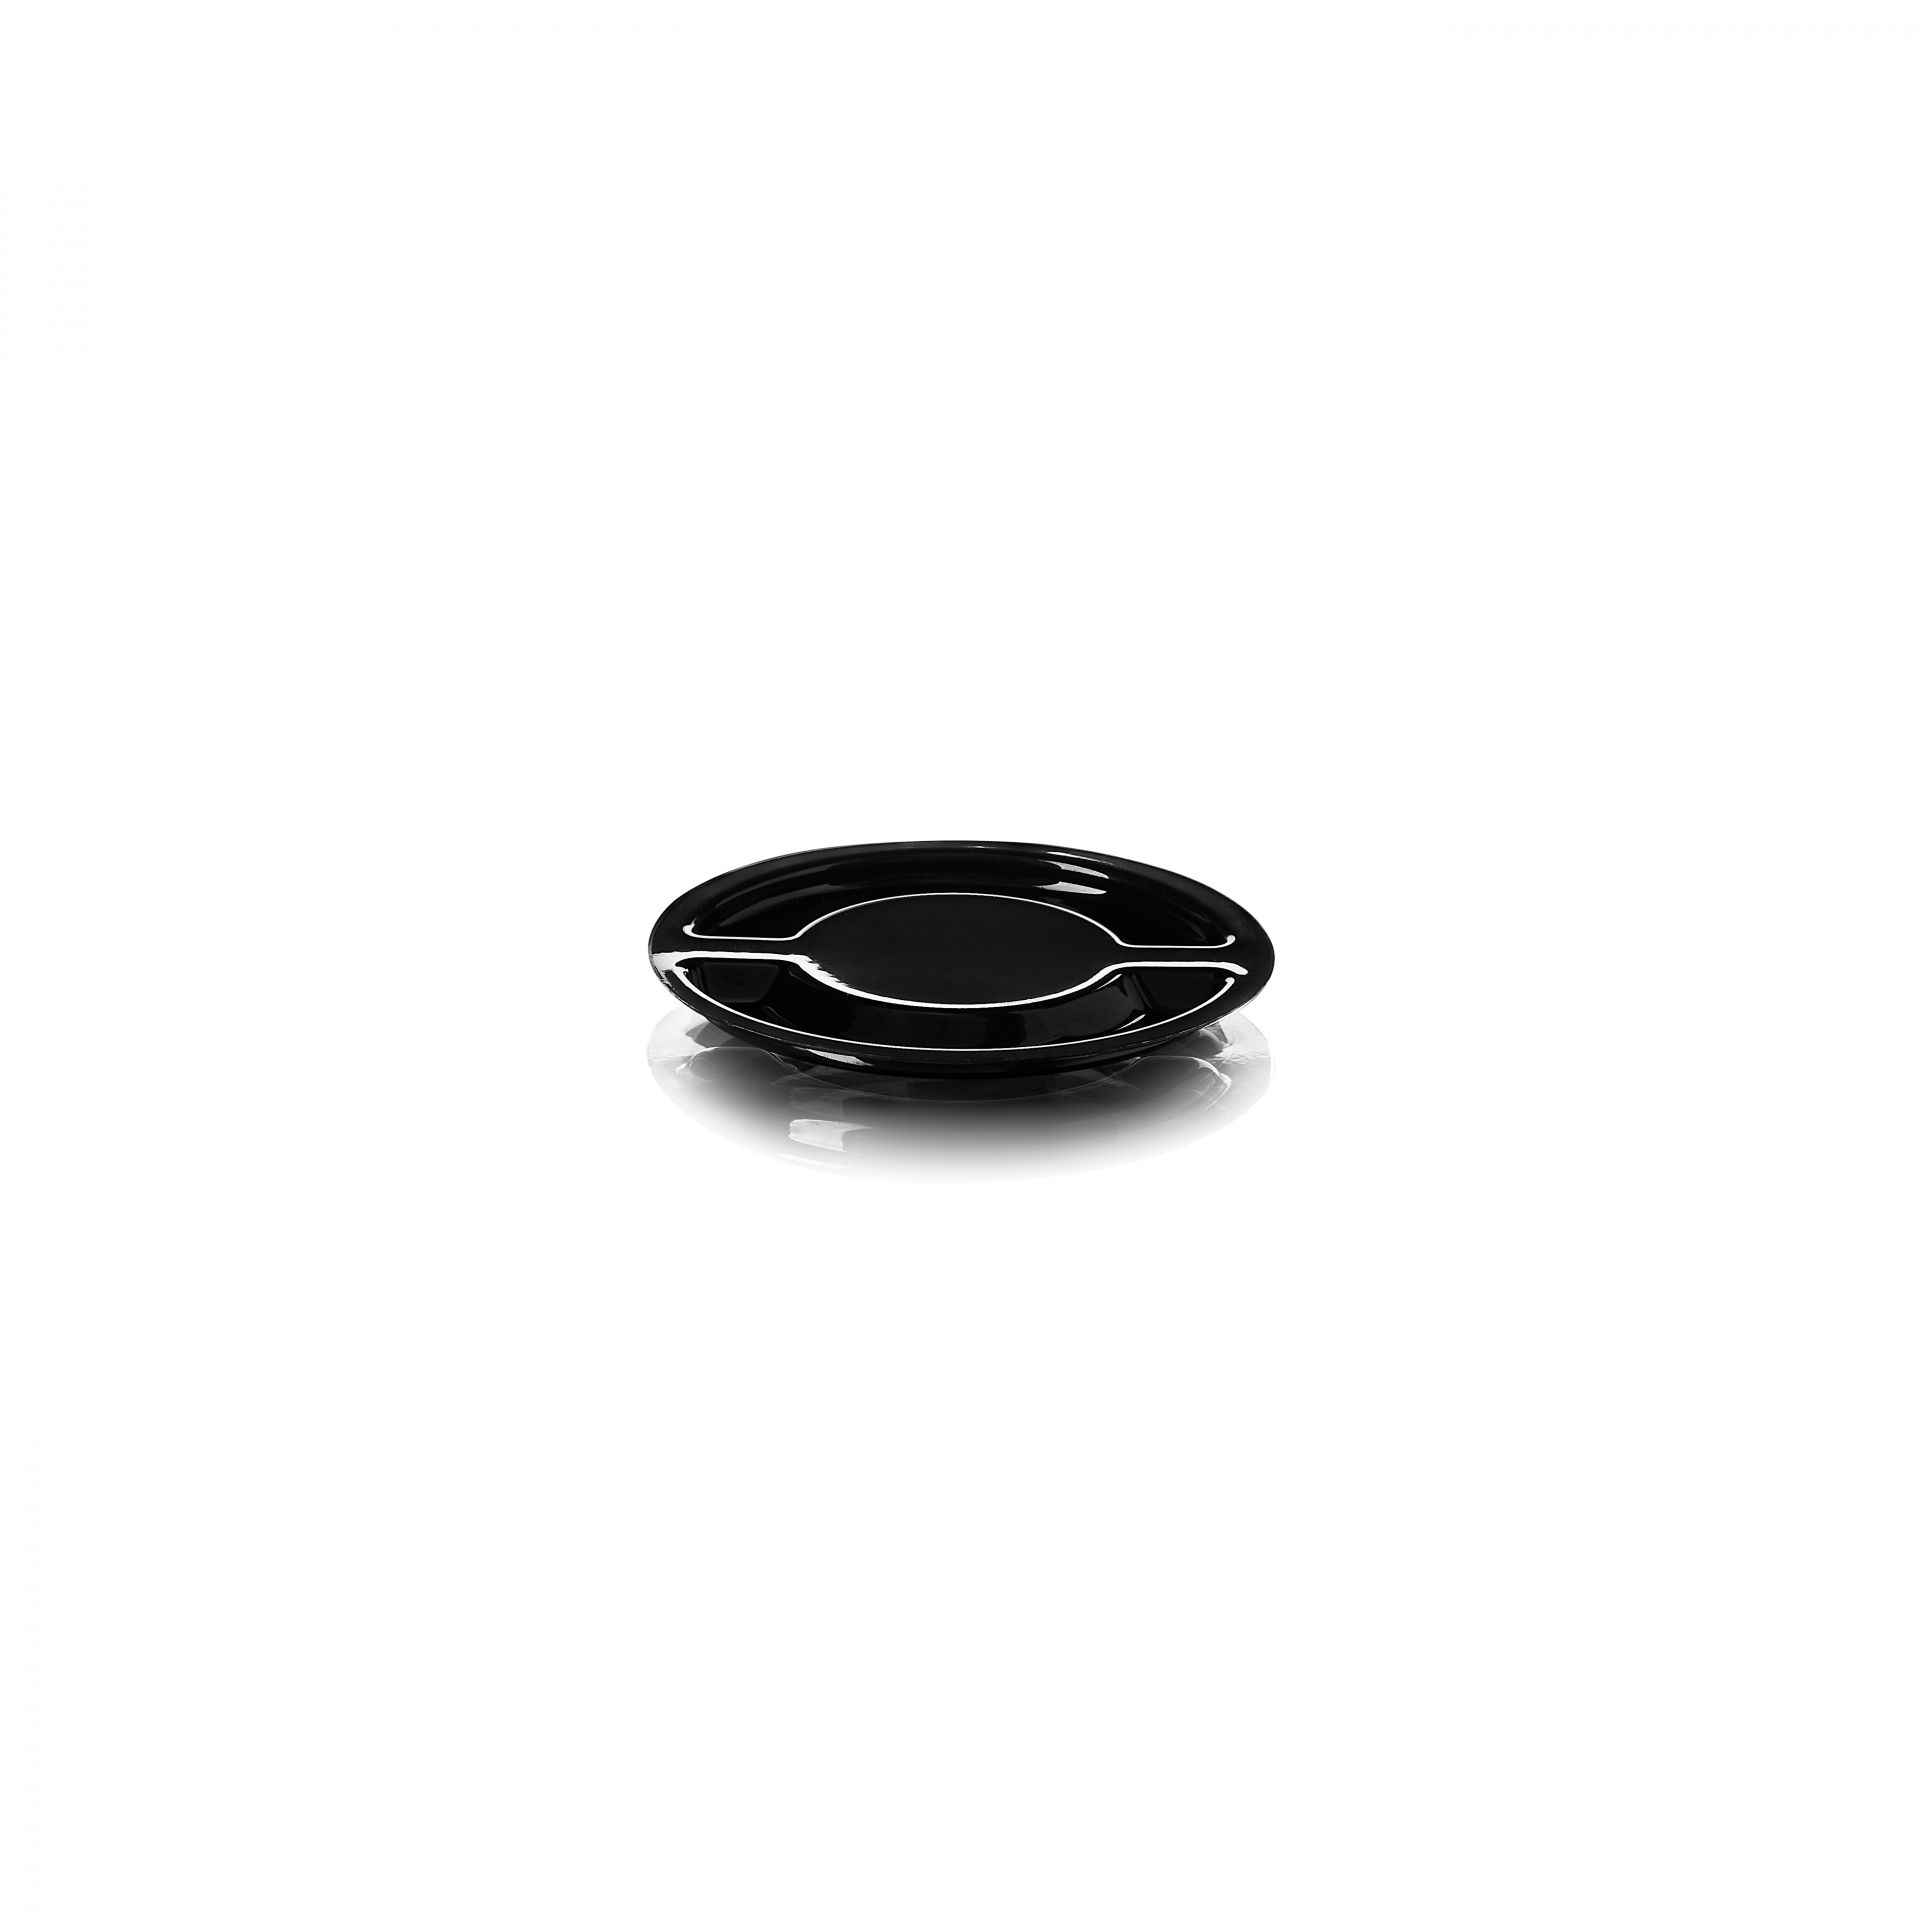 Disc liner, Modern, A-pet, black (Sirius 200)